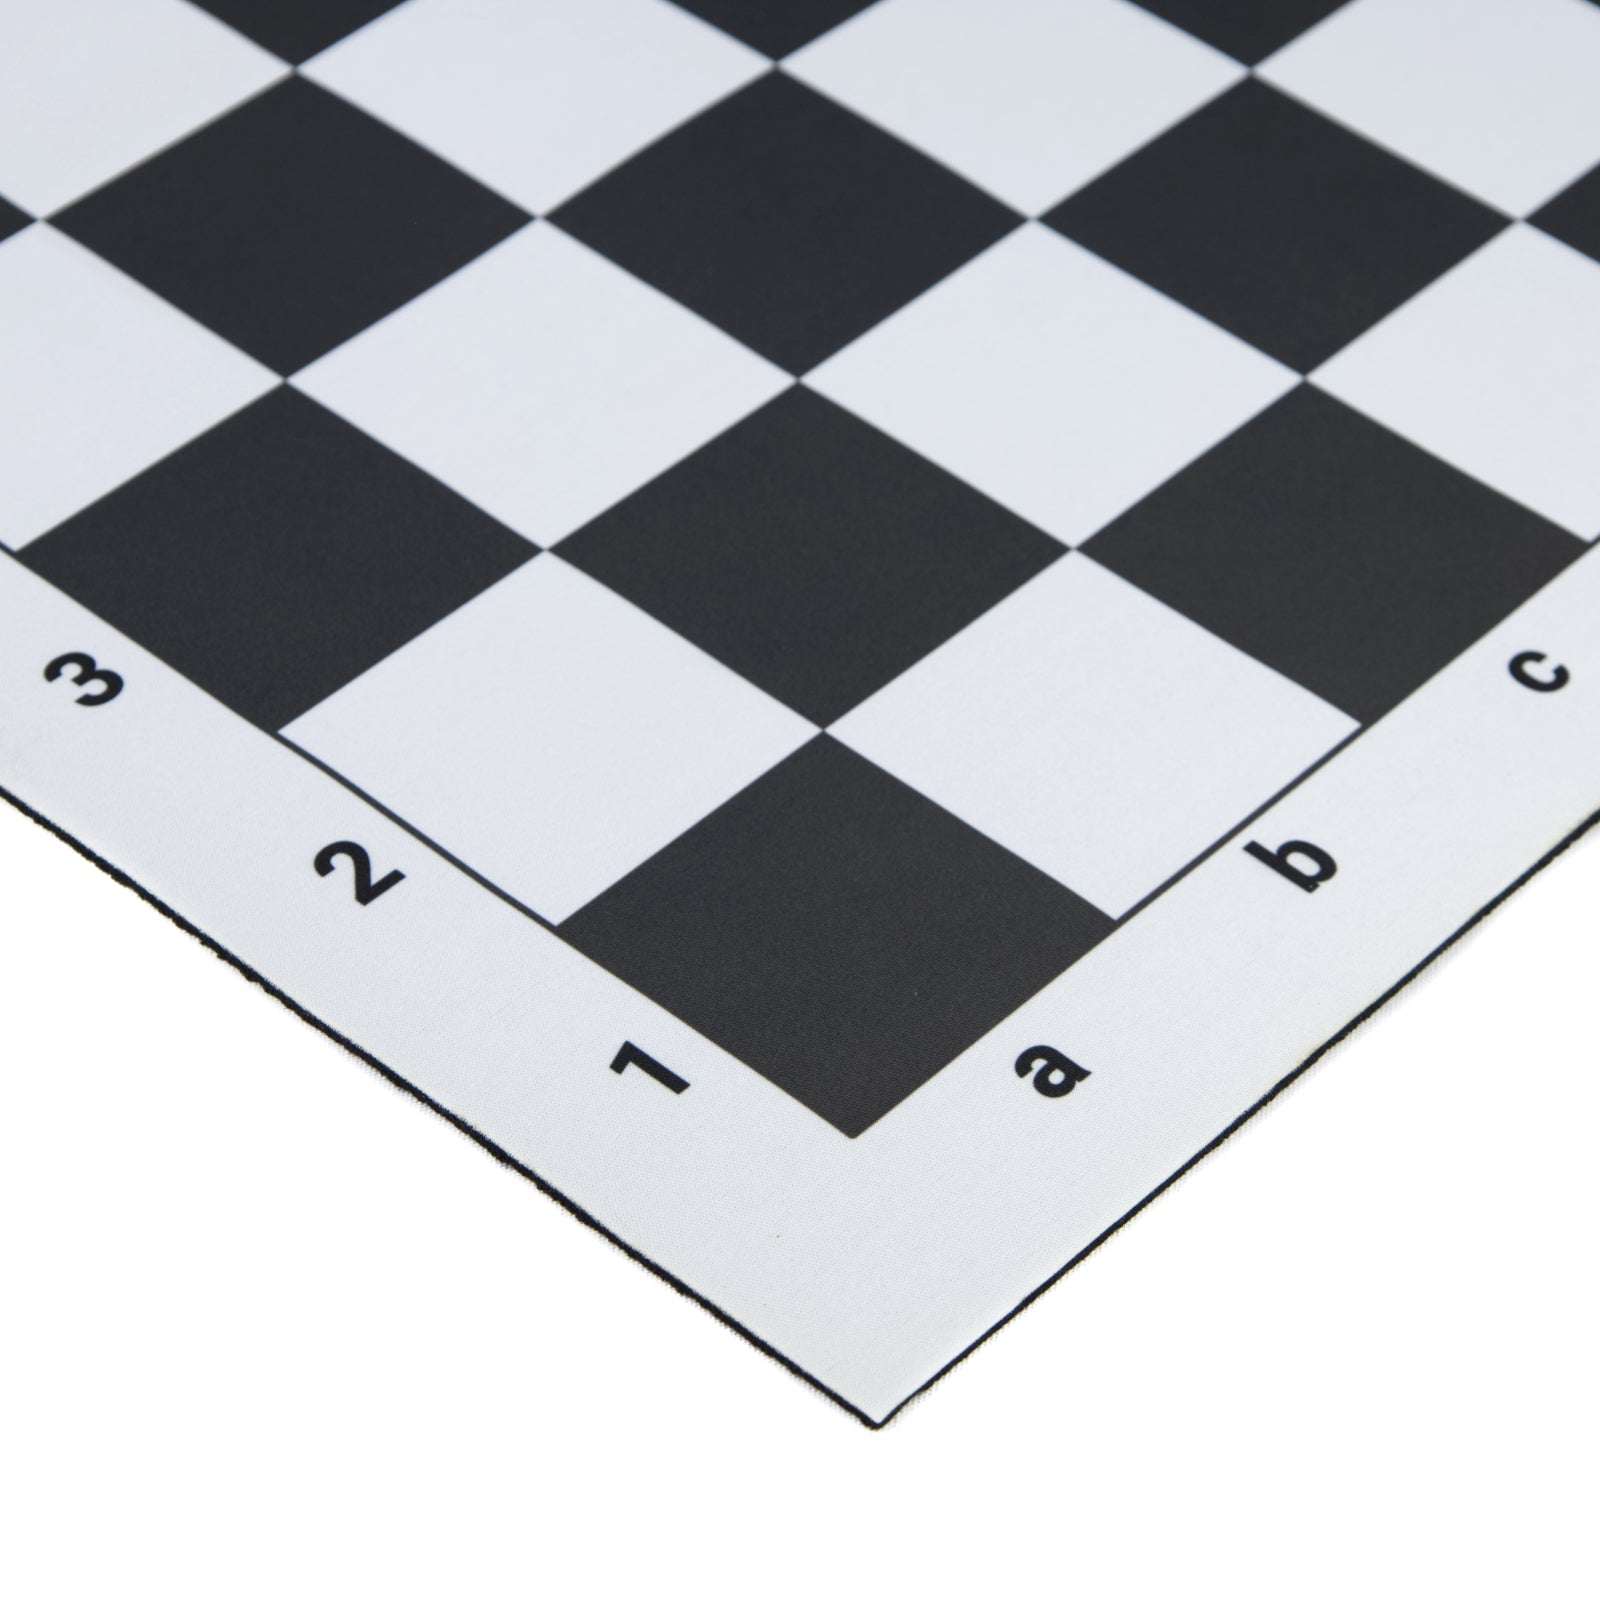 20" Tournament Mousepad Chess Board - Black